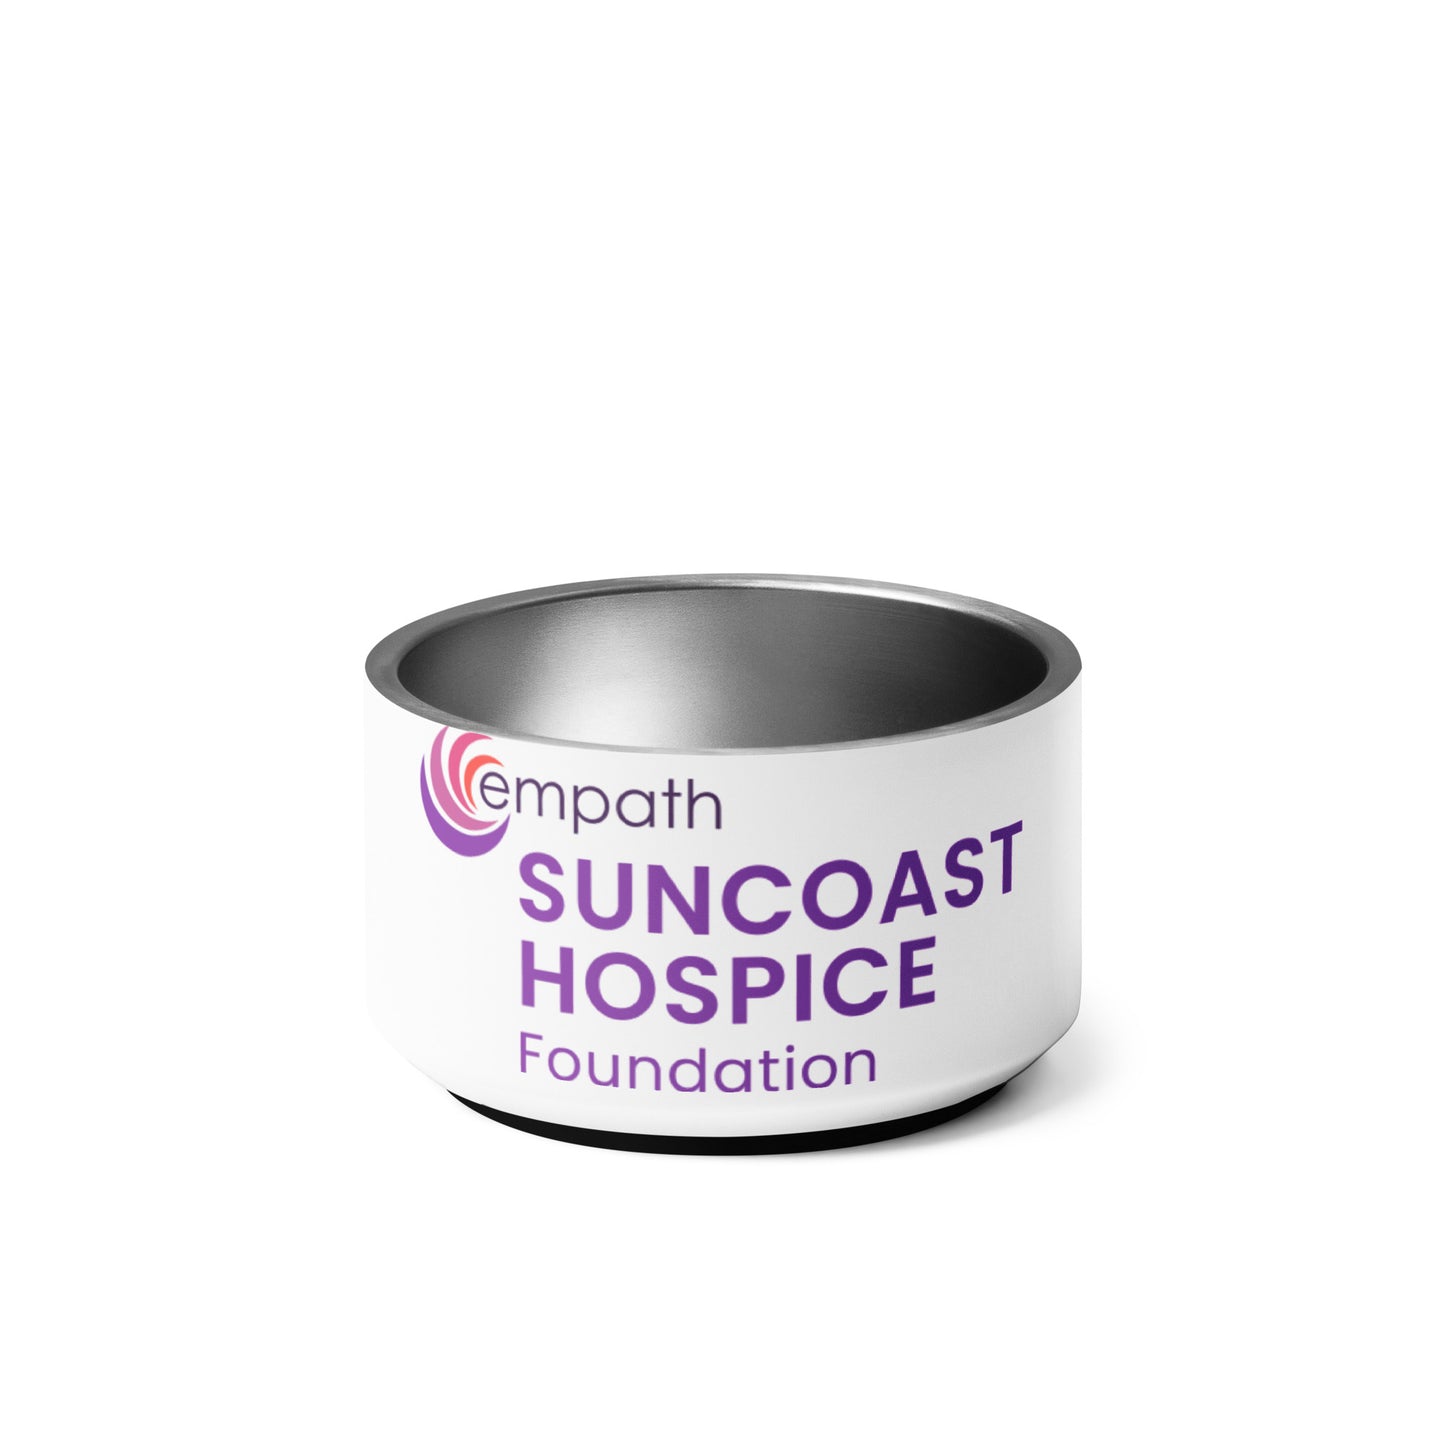 Pet bowl - Suncoast Hospice Foundation